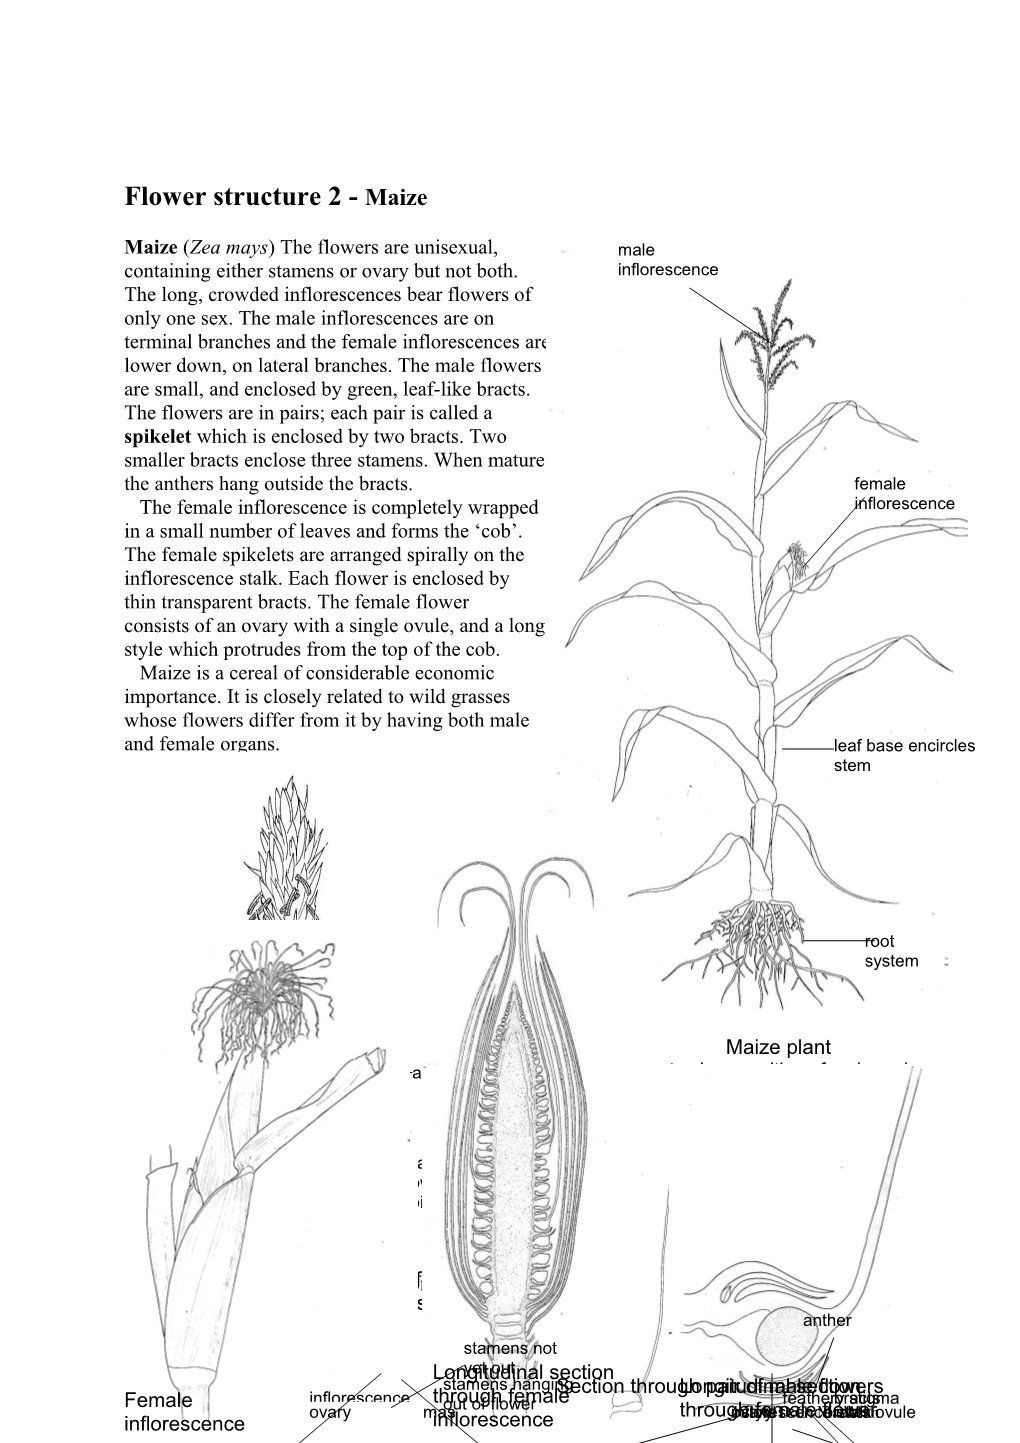 Flower Structure - Maize